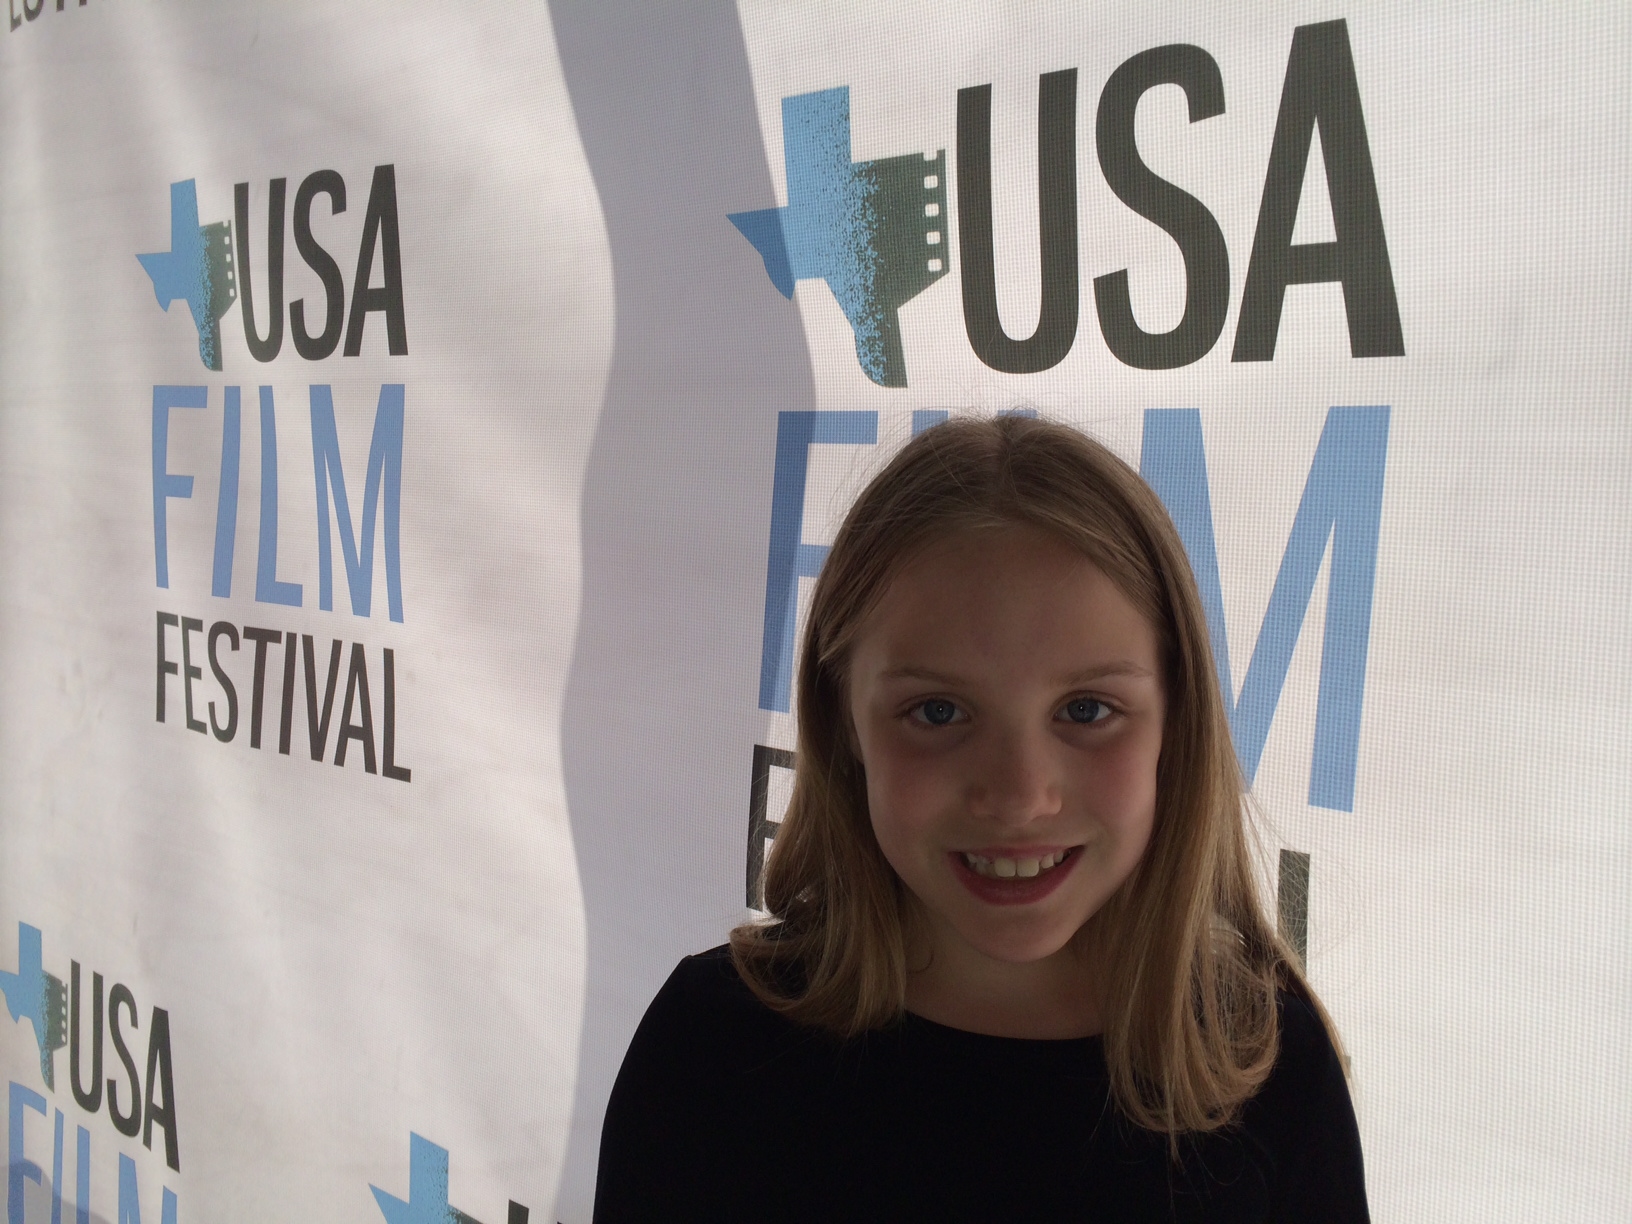 Celebrating at the USA Film Festival!